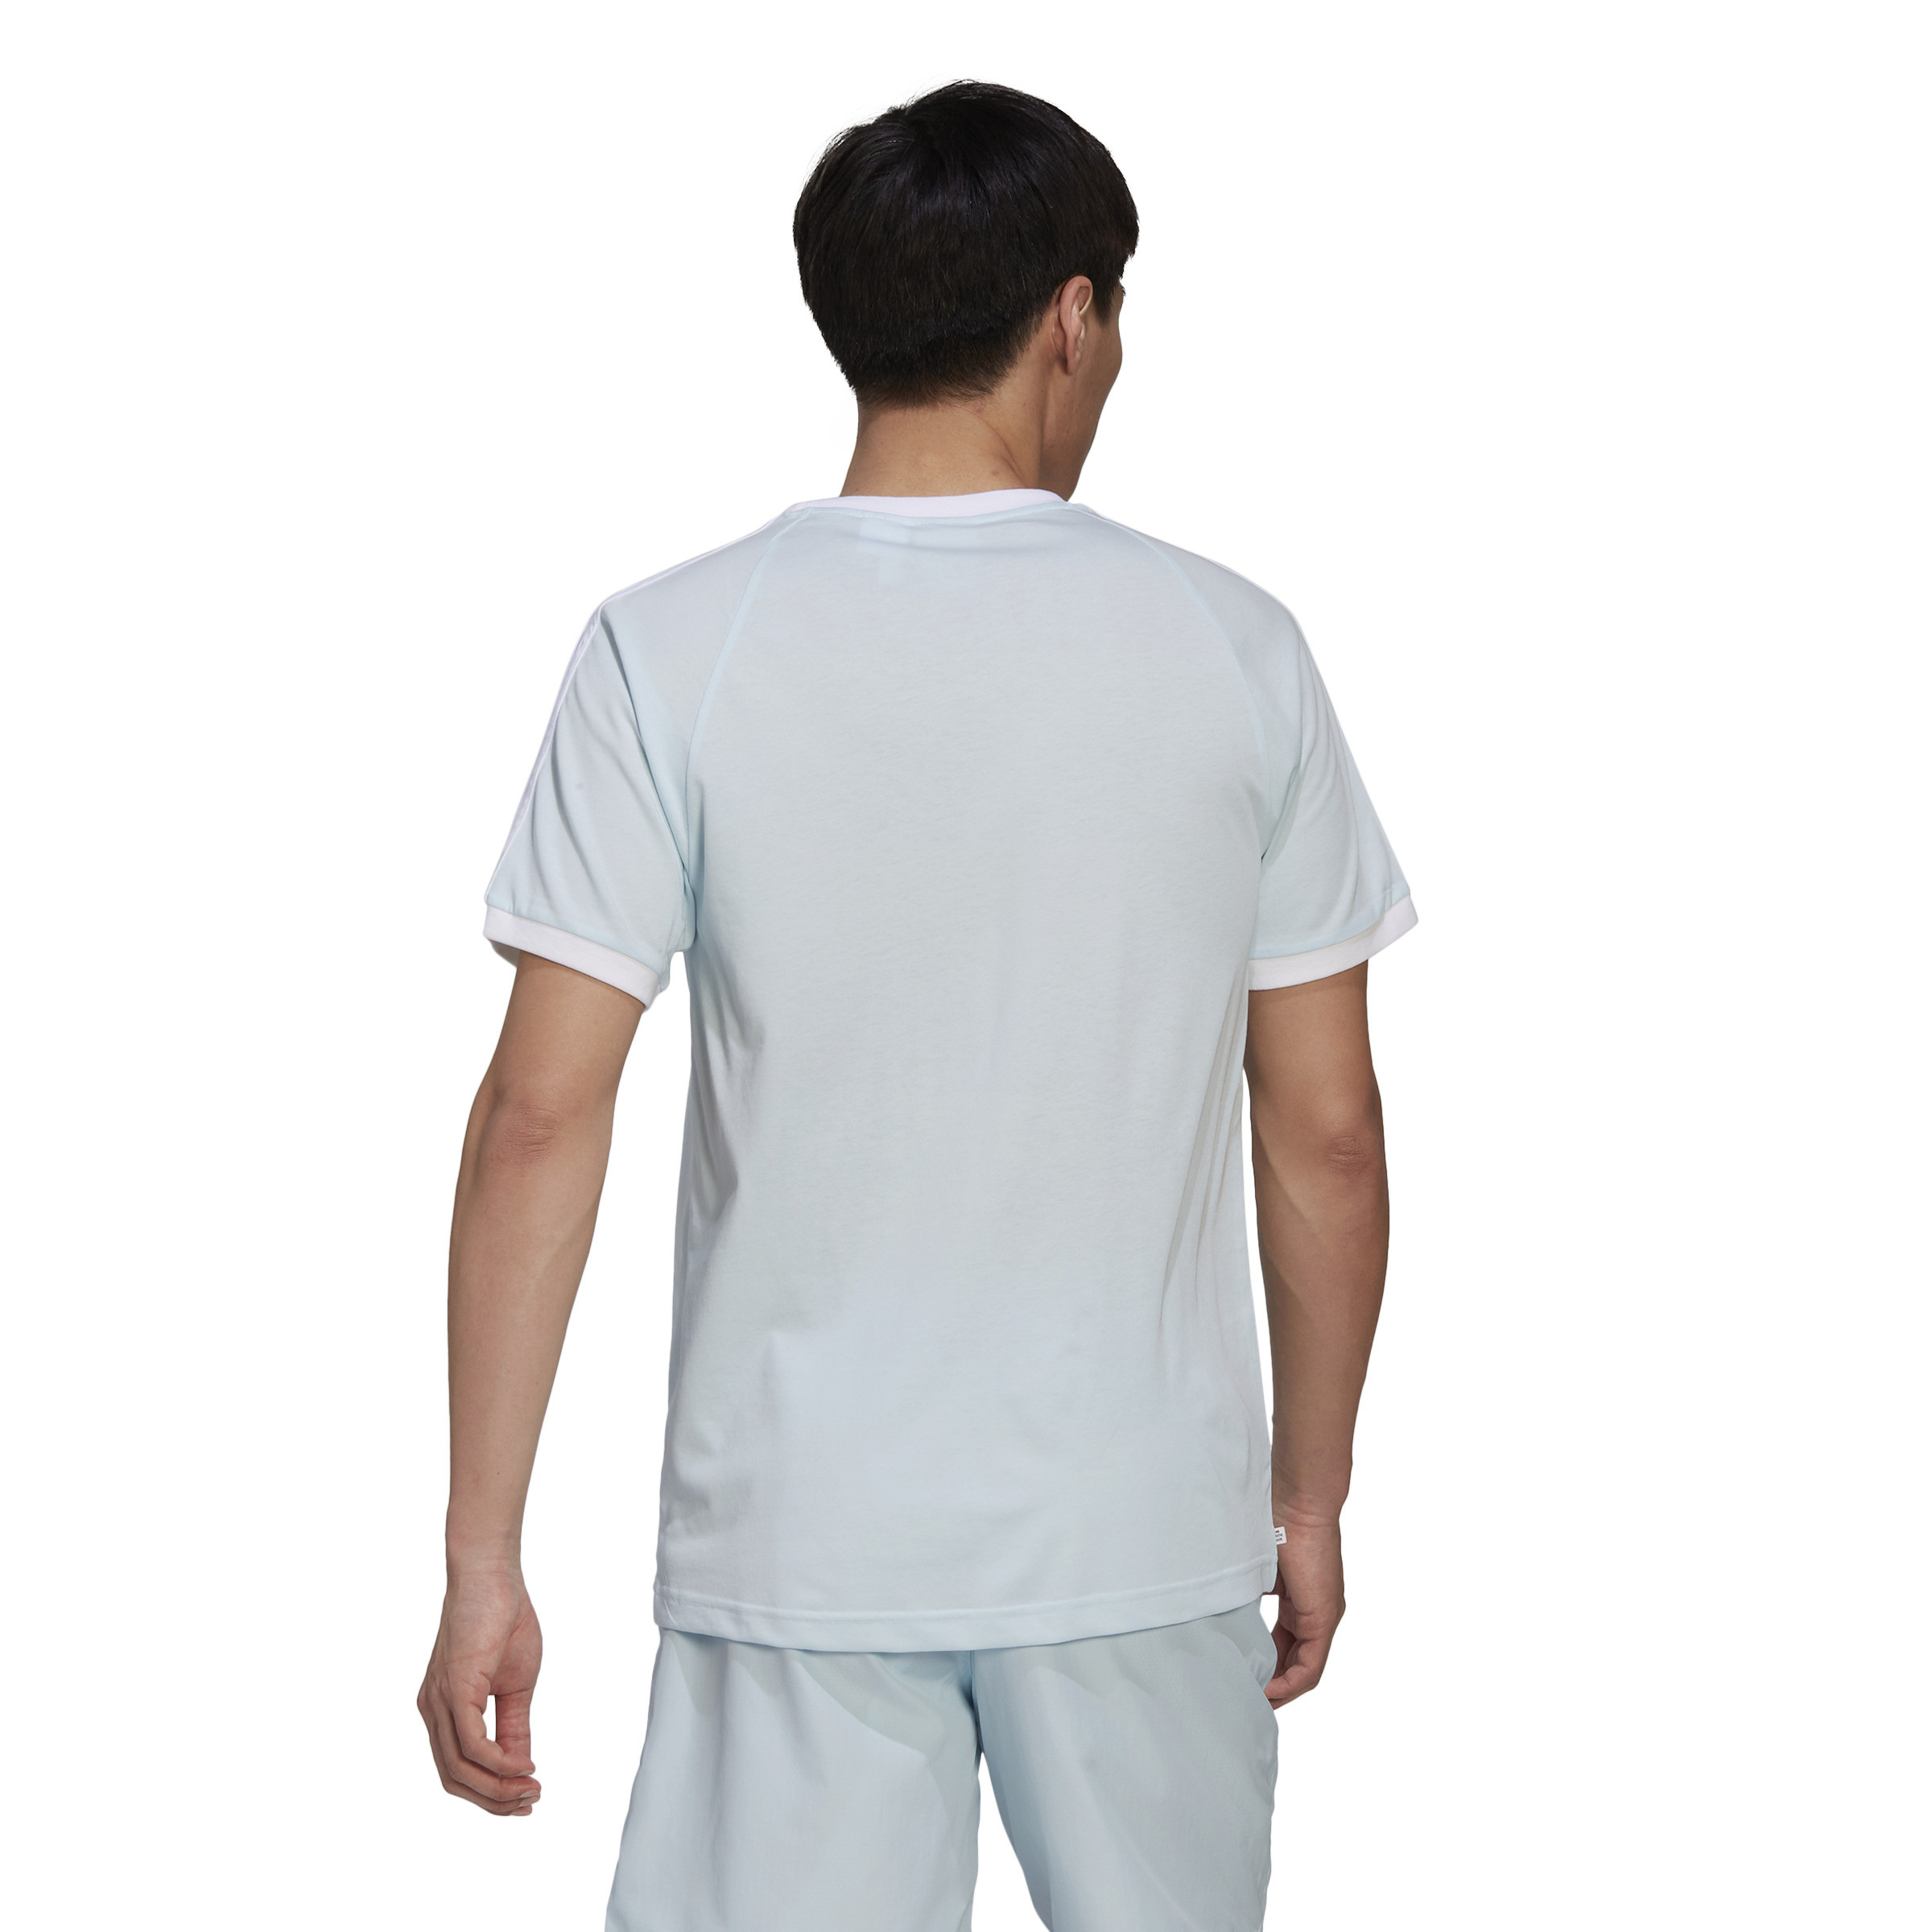 Adidas - T-shirt adicolor, Light Blue, large image number 2